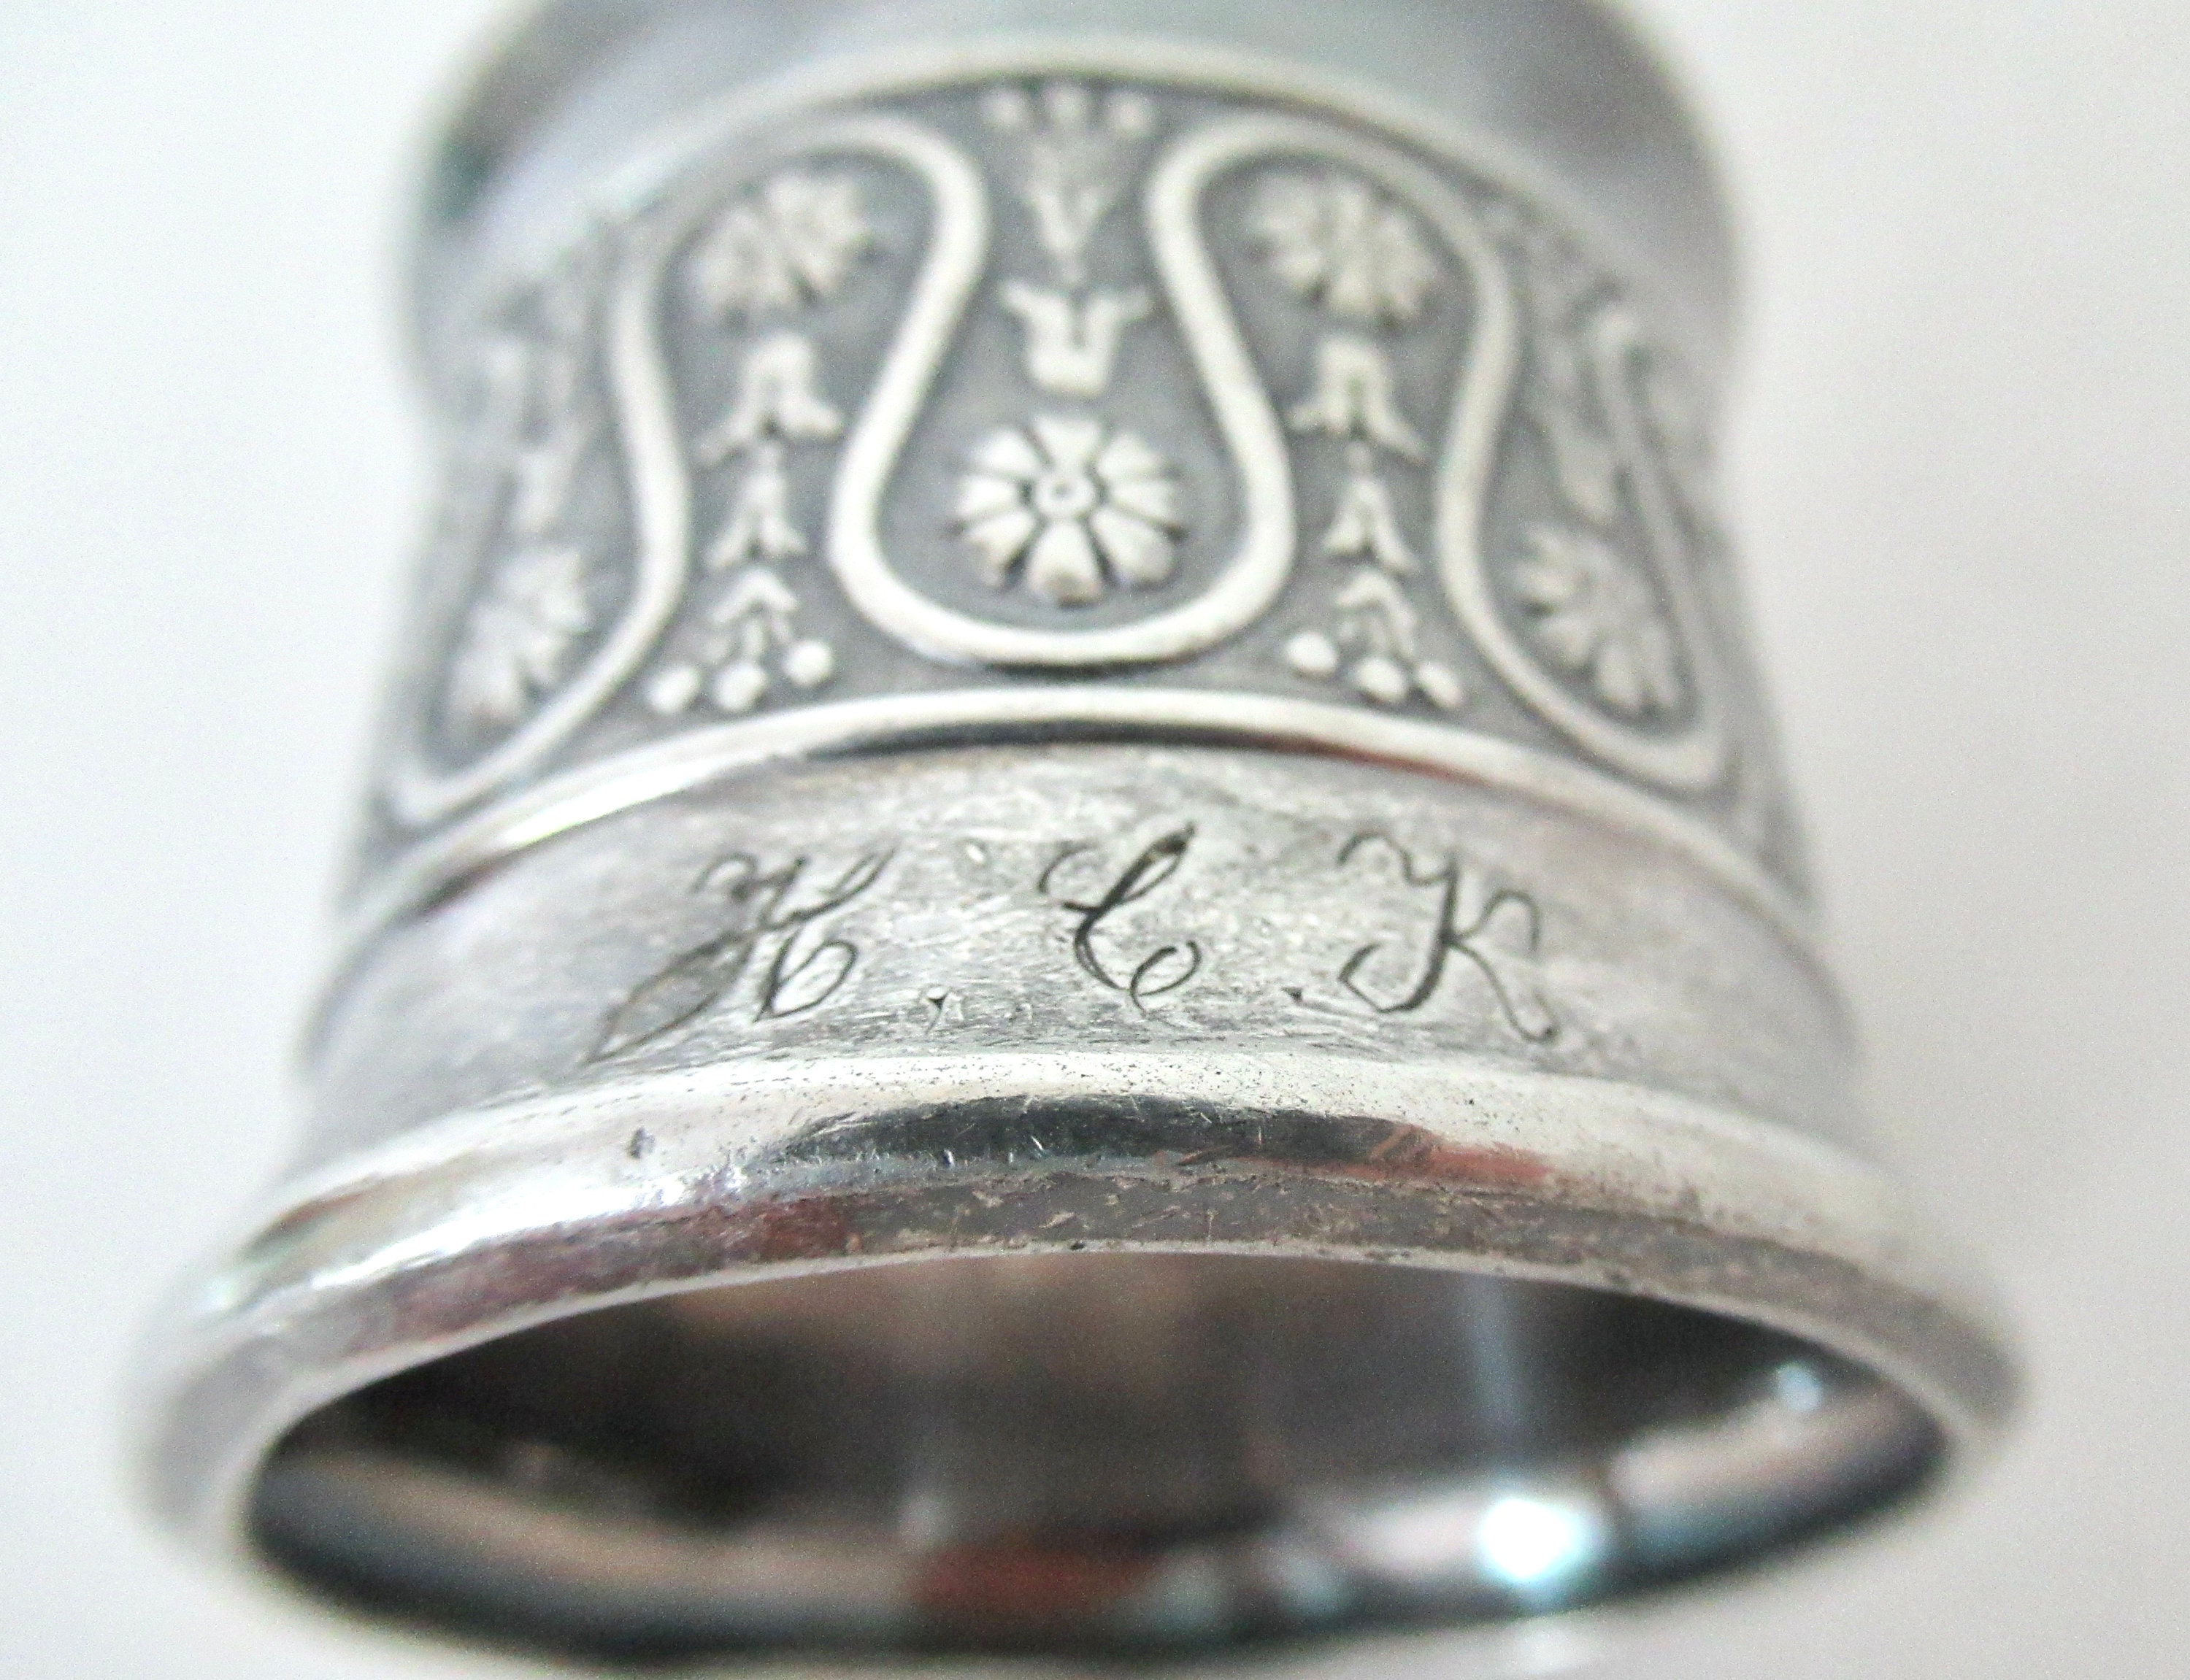 QTY 1 Natural Napkin Ring Holder, Wedding Napkin Ring, Unfinished